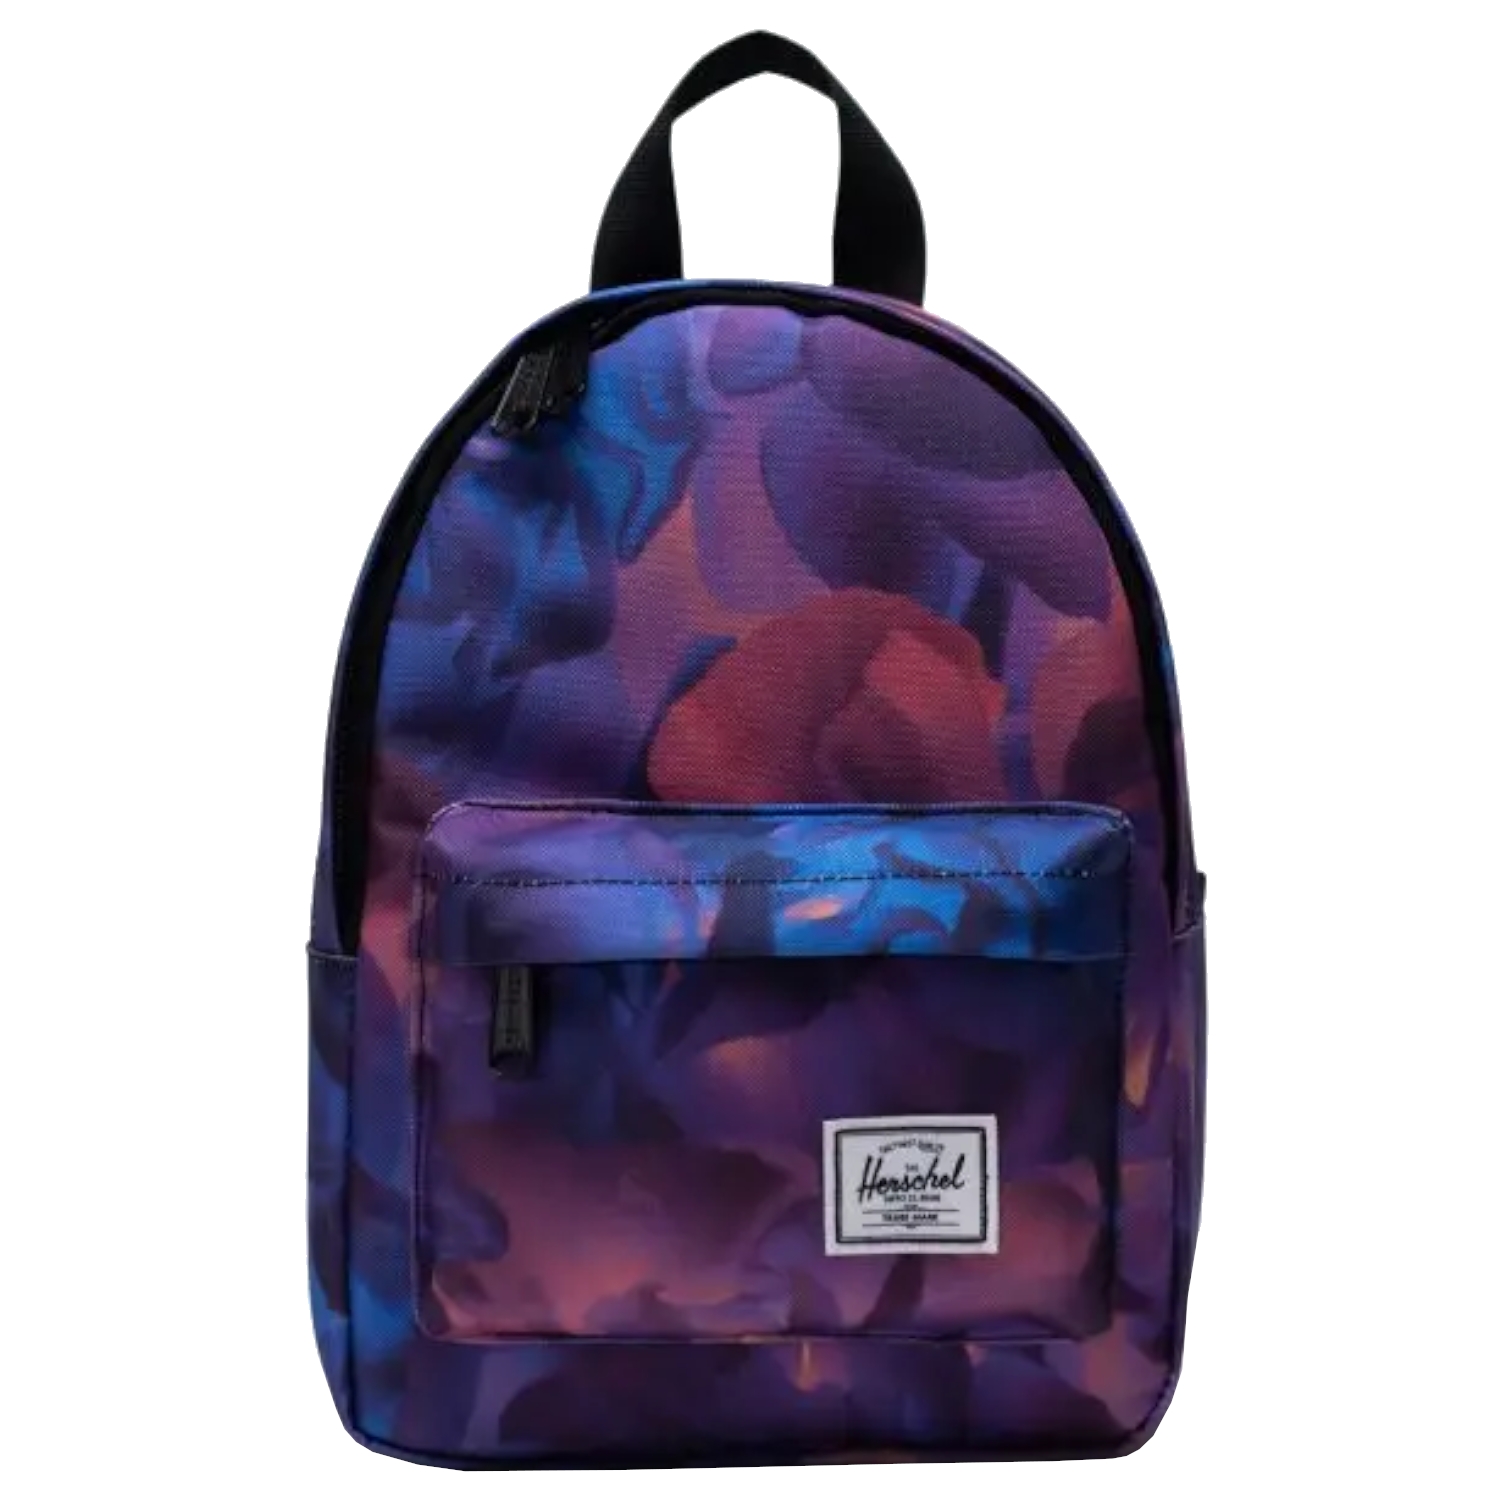 Рюкзак Herschel Herschel Classic Mini Backpack, фиолетовый